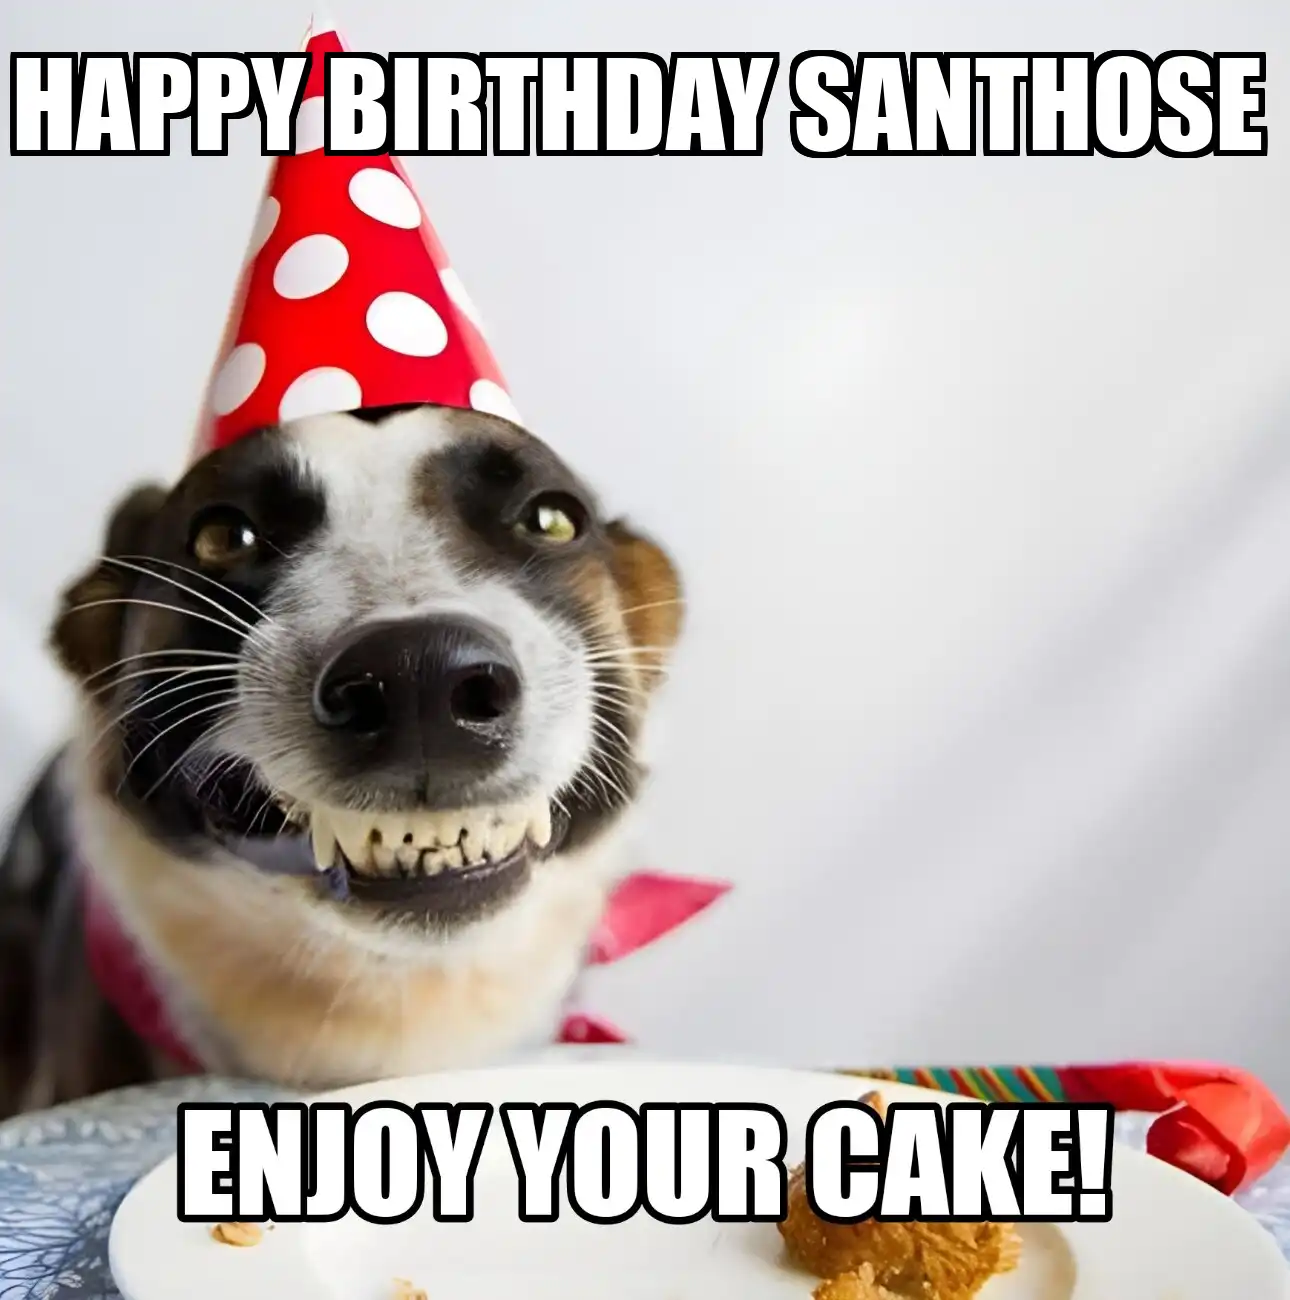 Happy Birthday Santhose Enjoy Your Cake Dog Meme